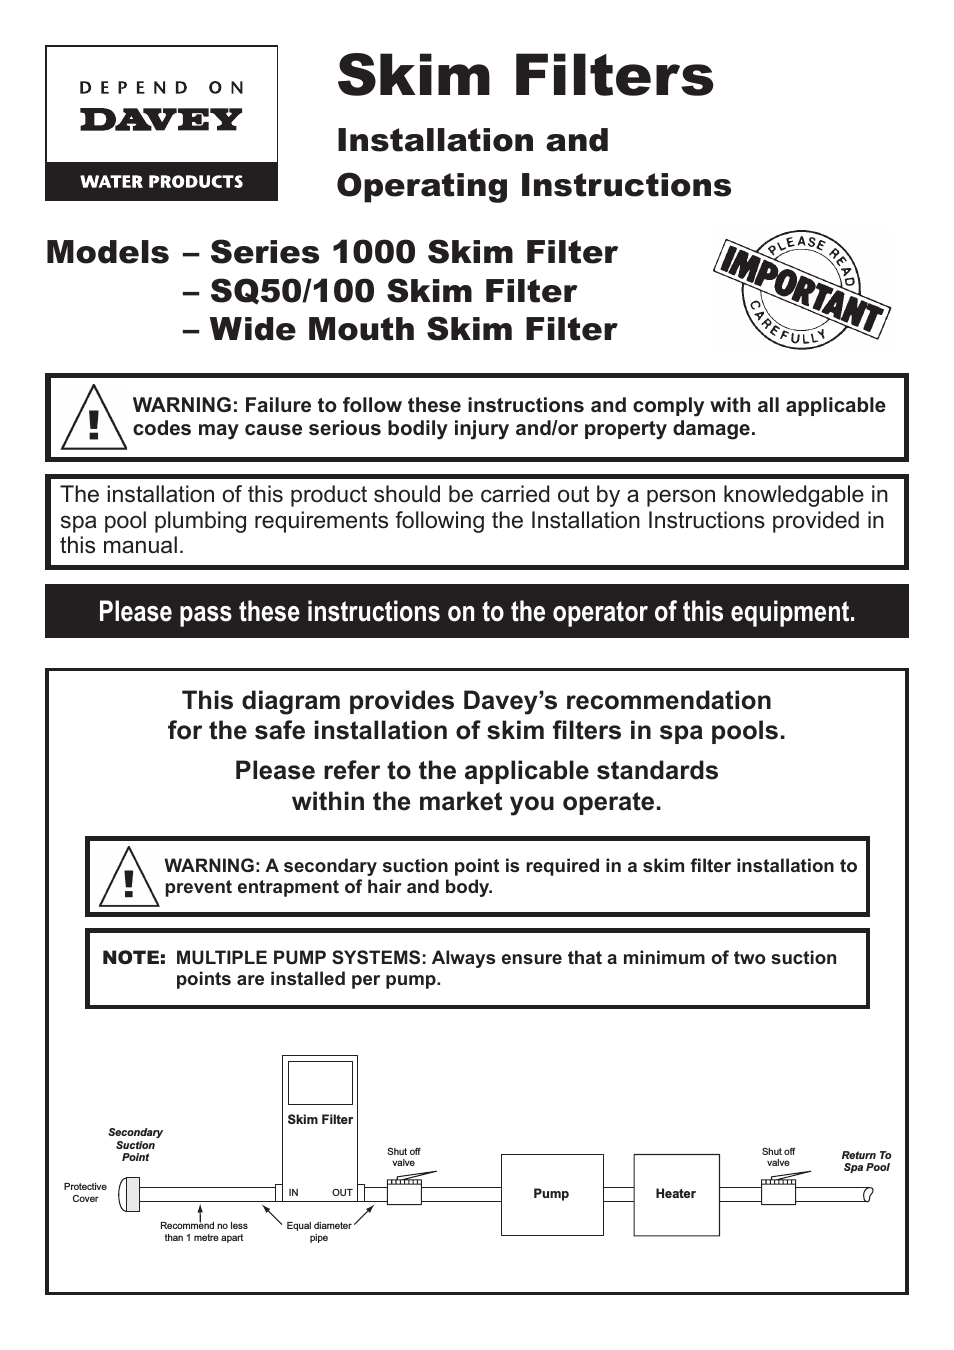 Skim Filter Series 1000